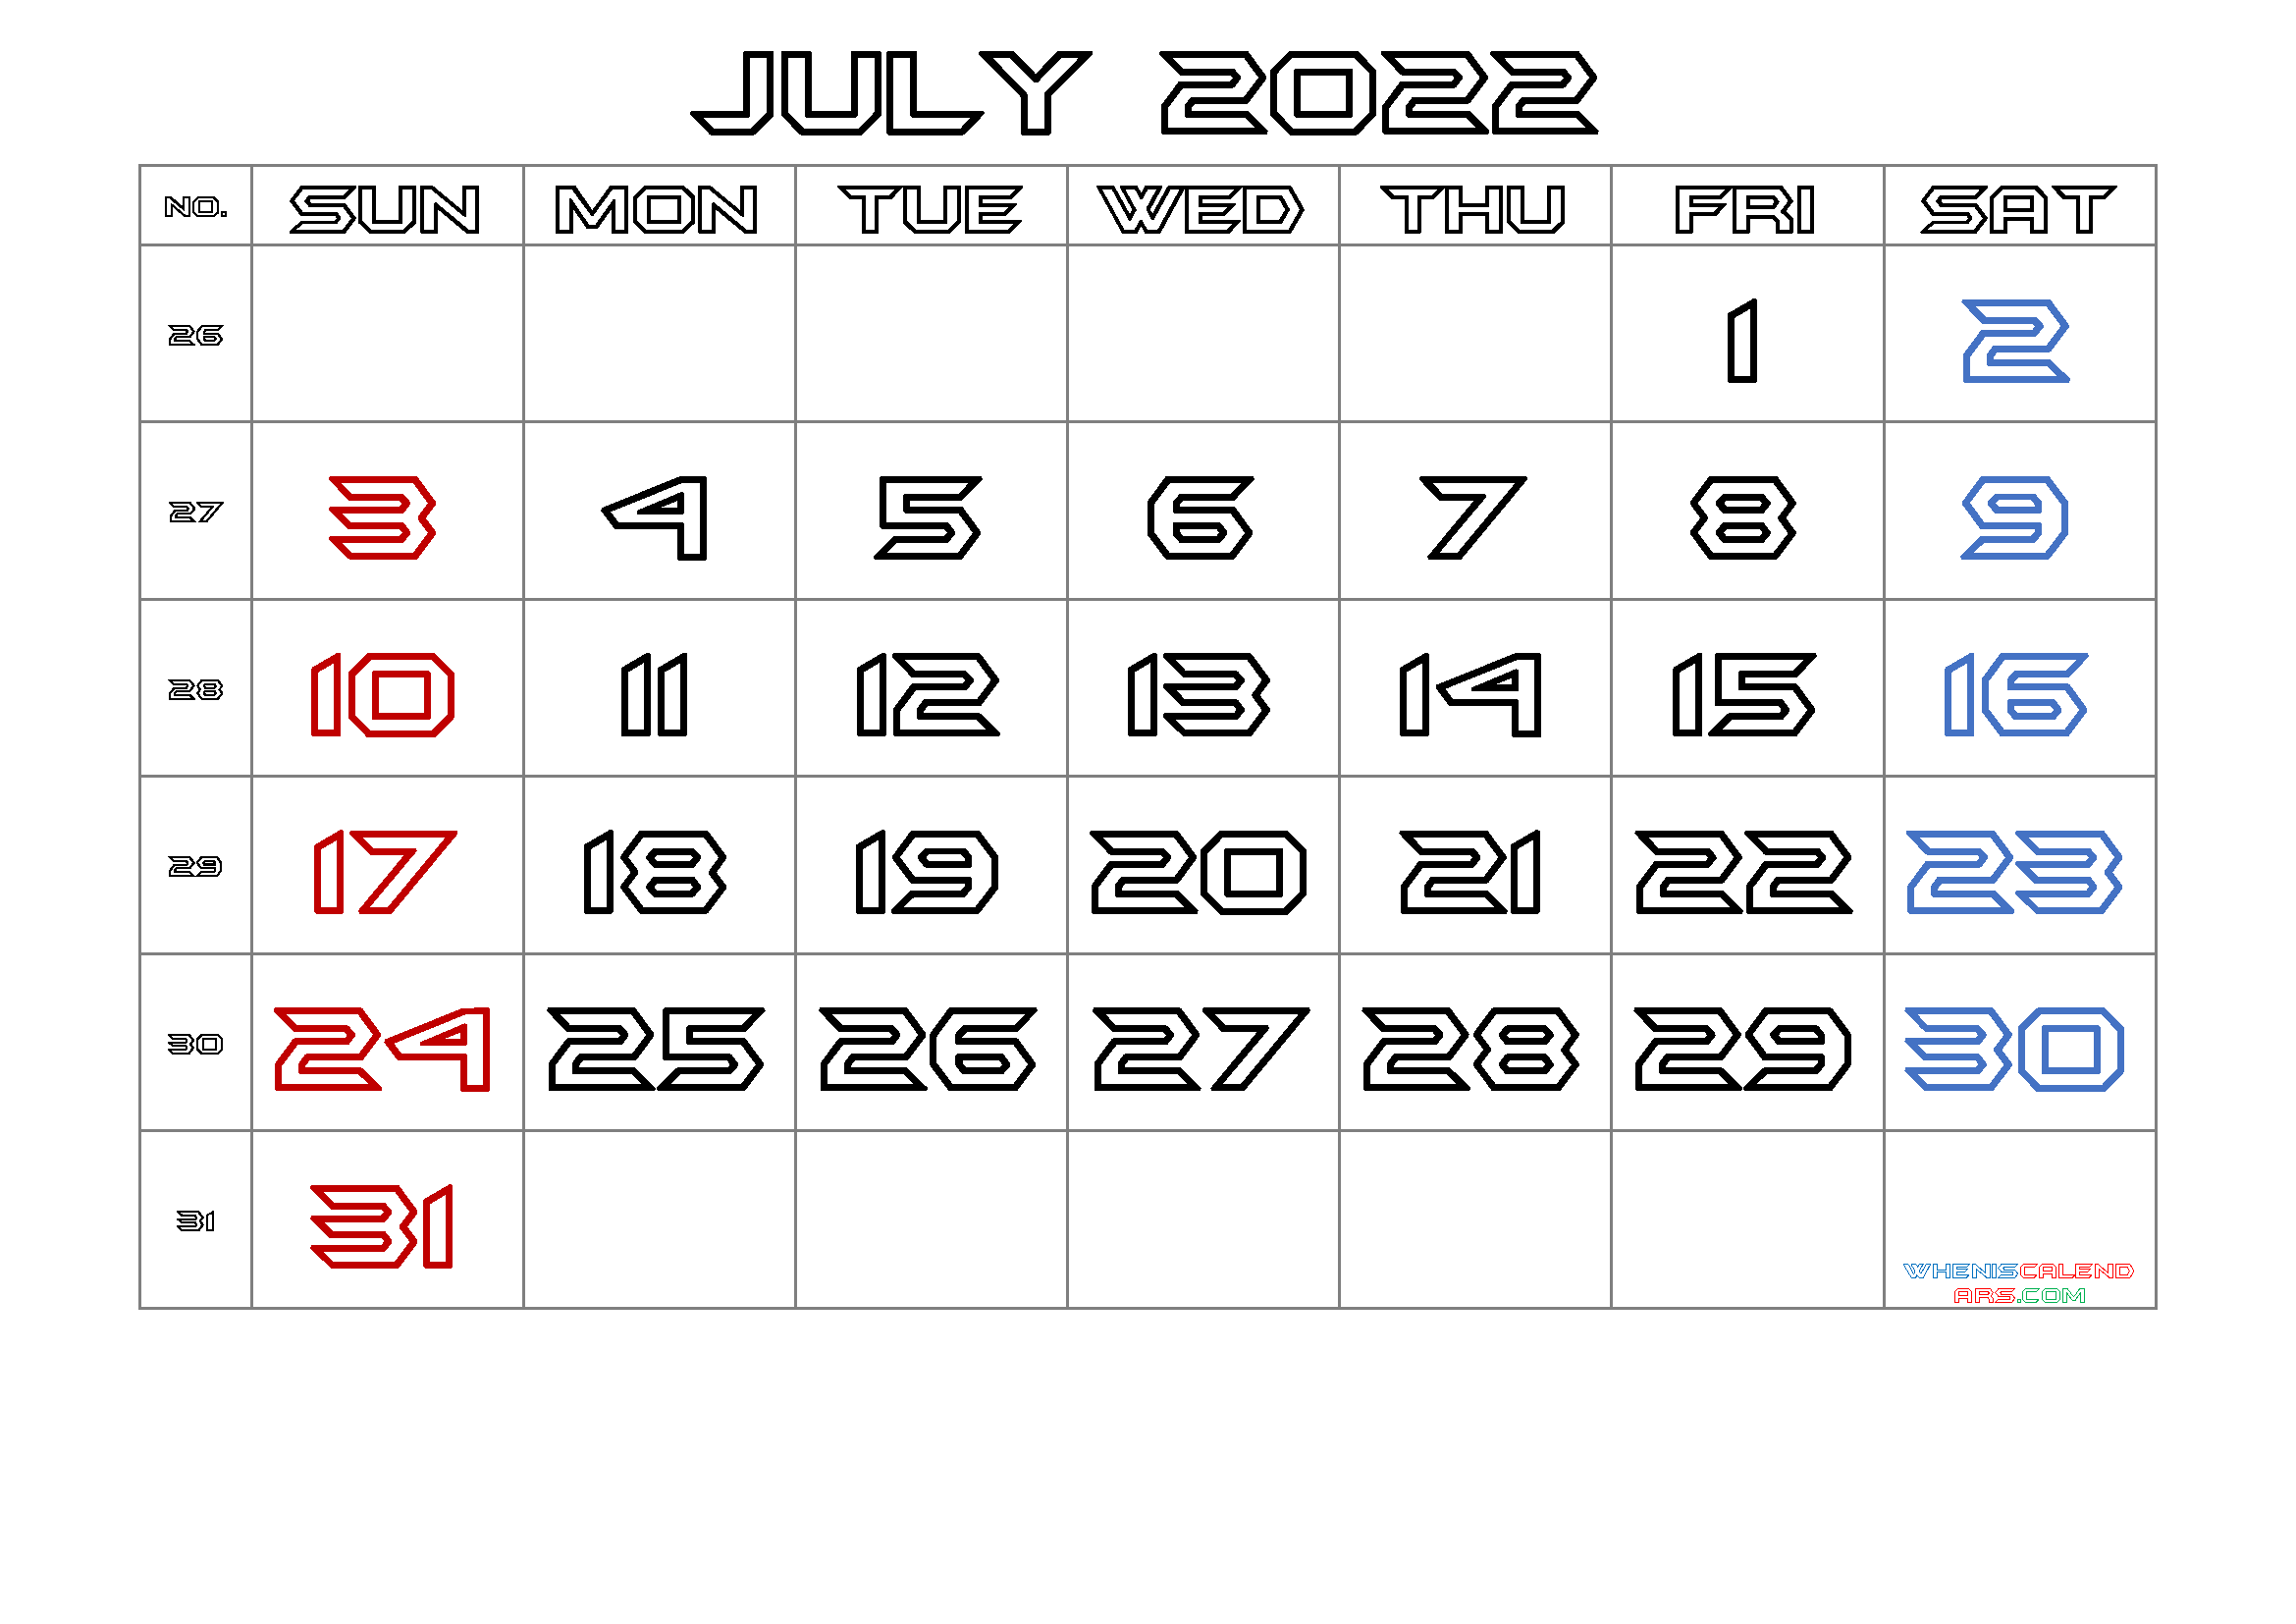 Free Printable July 2022 Calendars